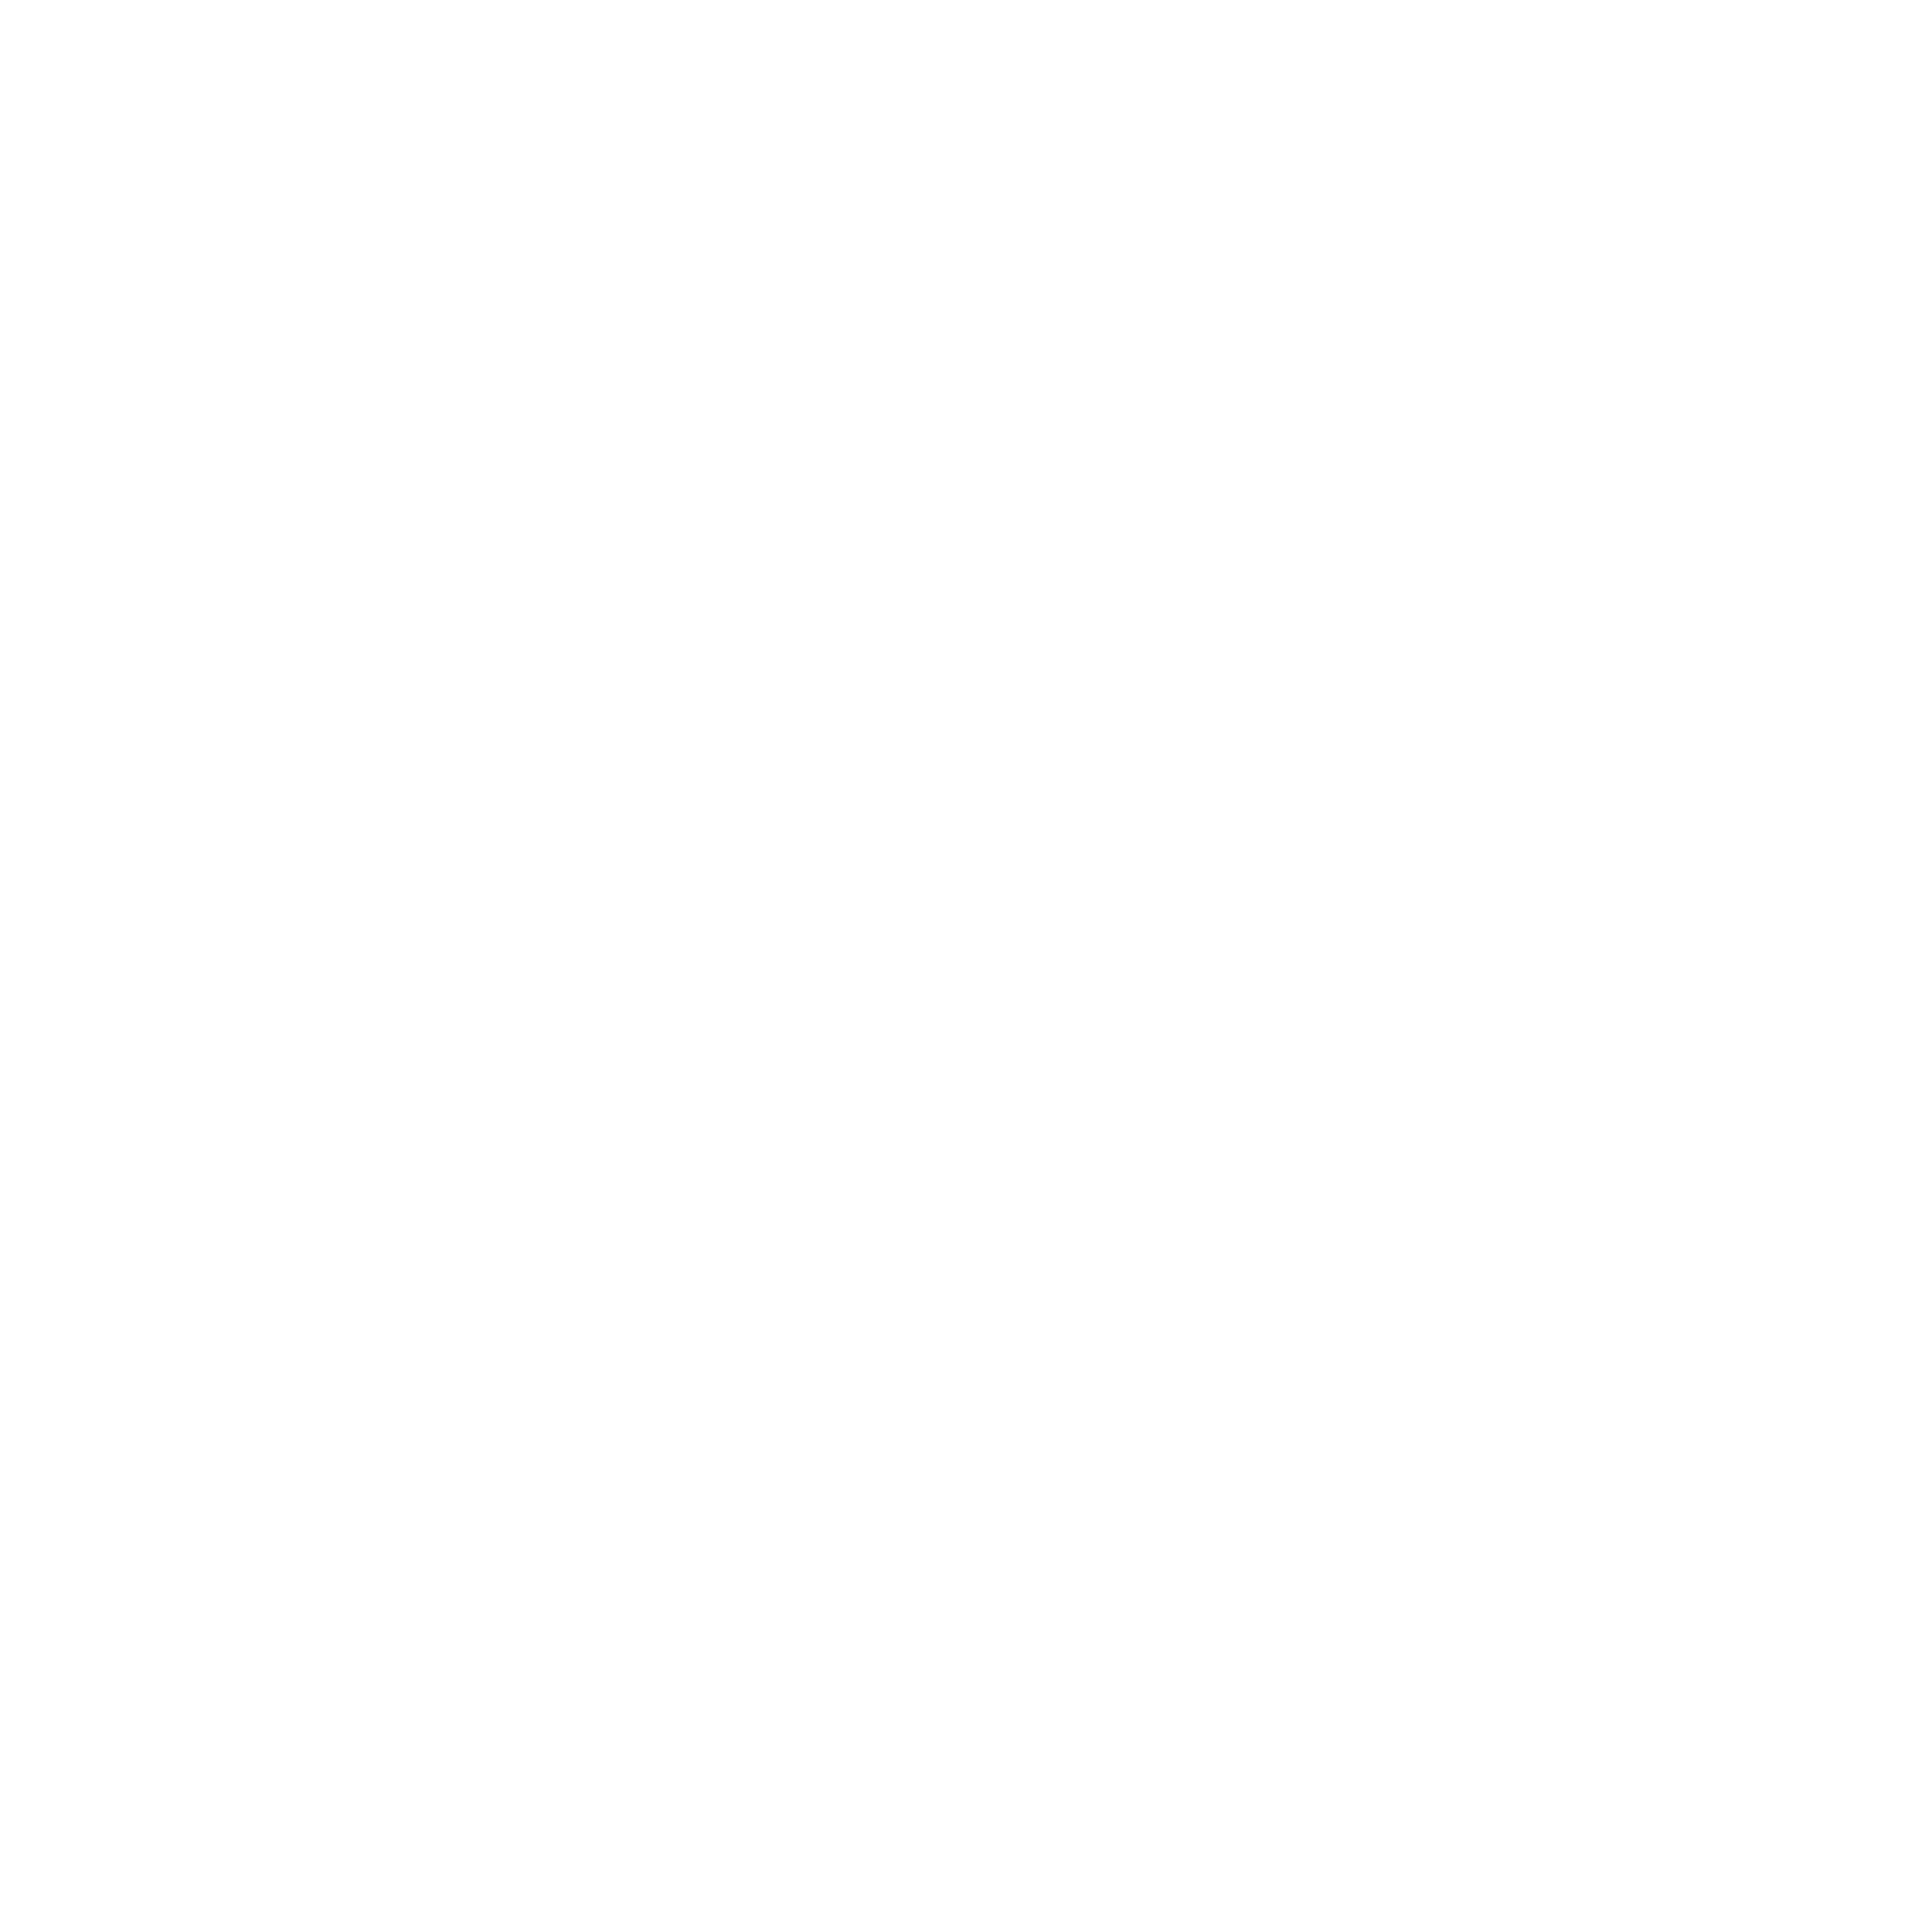 Gamesa Logo - Gamesa Logo PNG Transparent & SVG Vector - Freebie Supply